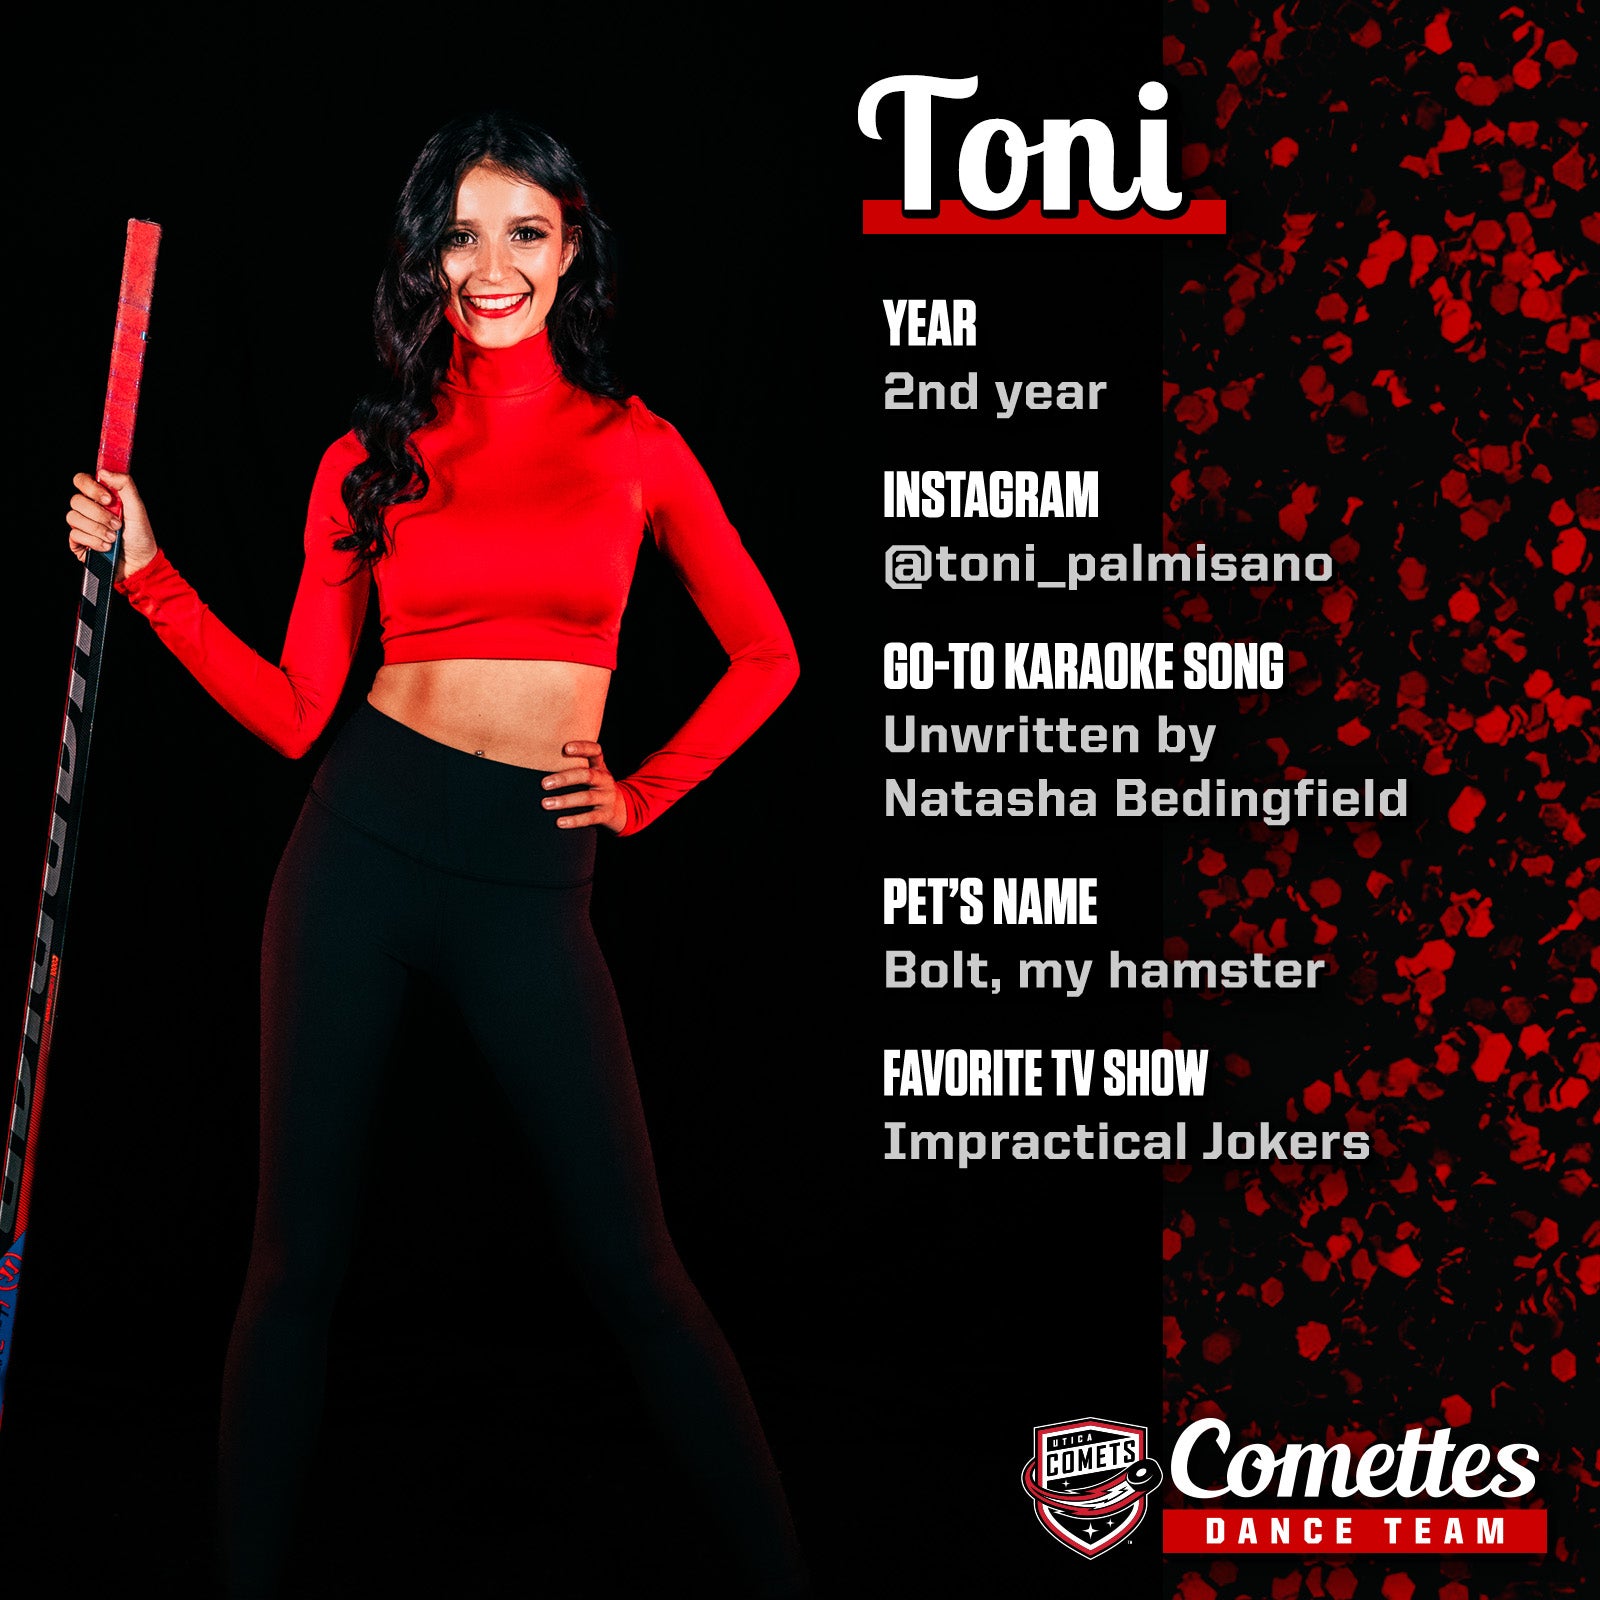 Meet The Comettes_Template_Toni copy.jpg